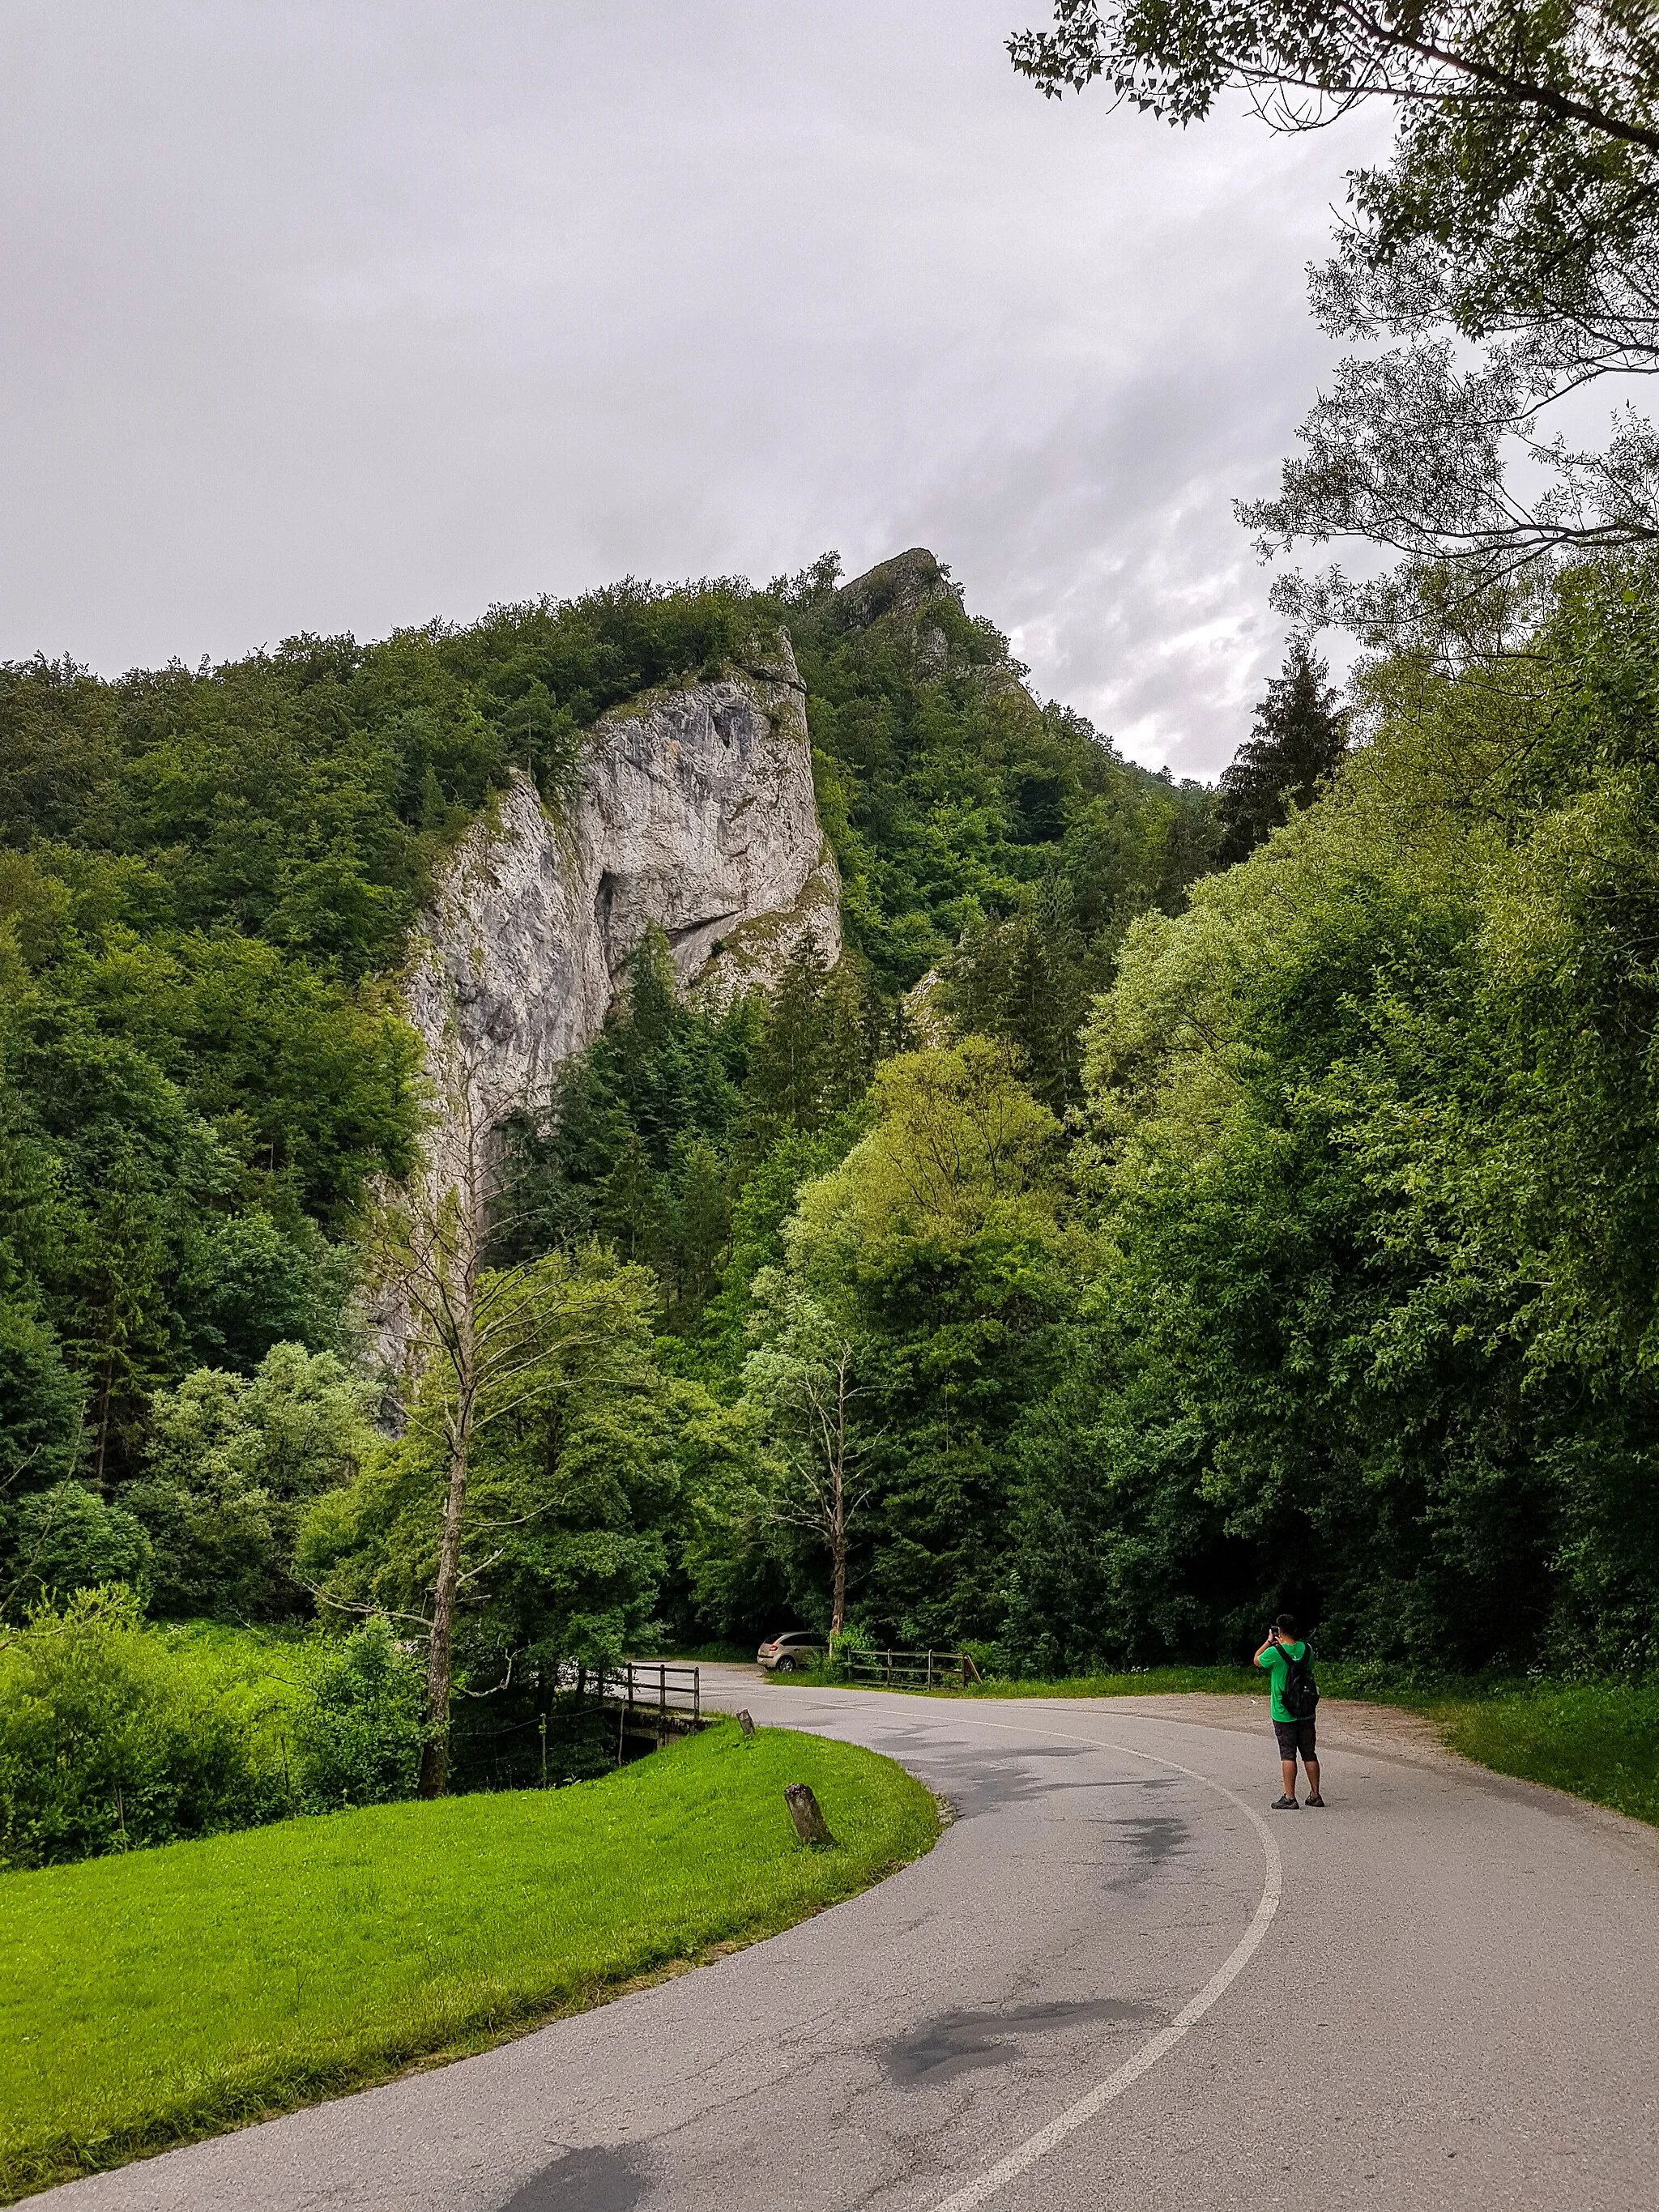 Photo showing: Manínska Gorge (Manínska tiesňava) near city of Považská Bystrica, Slovakia pictured in July 2020.